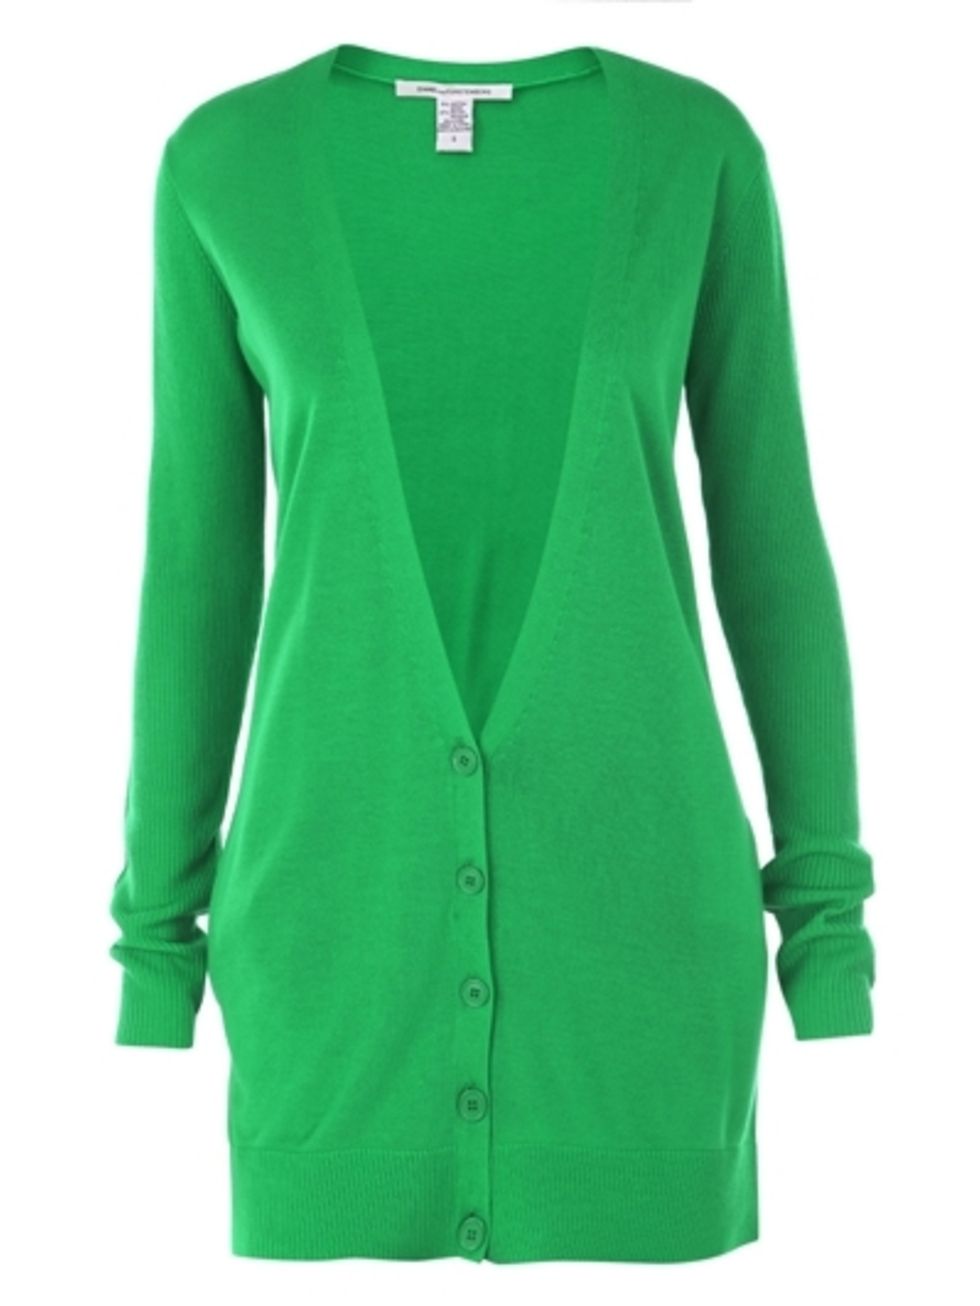 Green, Product, Sleeve, Textile, Collar, Pattern, Fashion, Teal, Turquoise, Sweatshirt, 